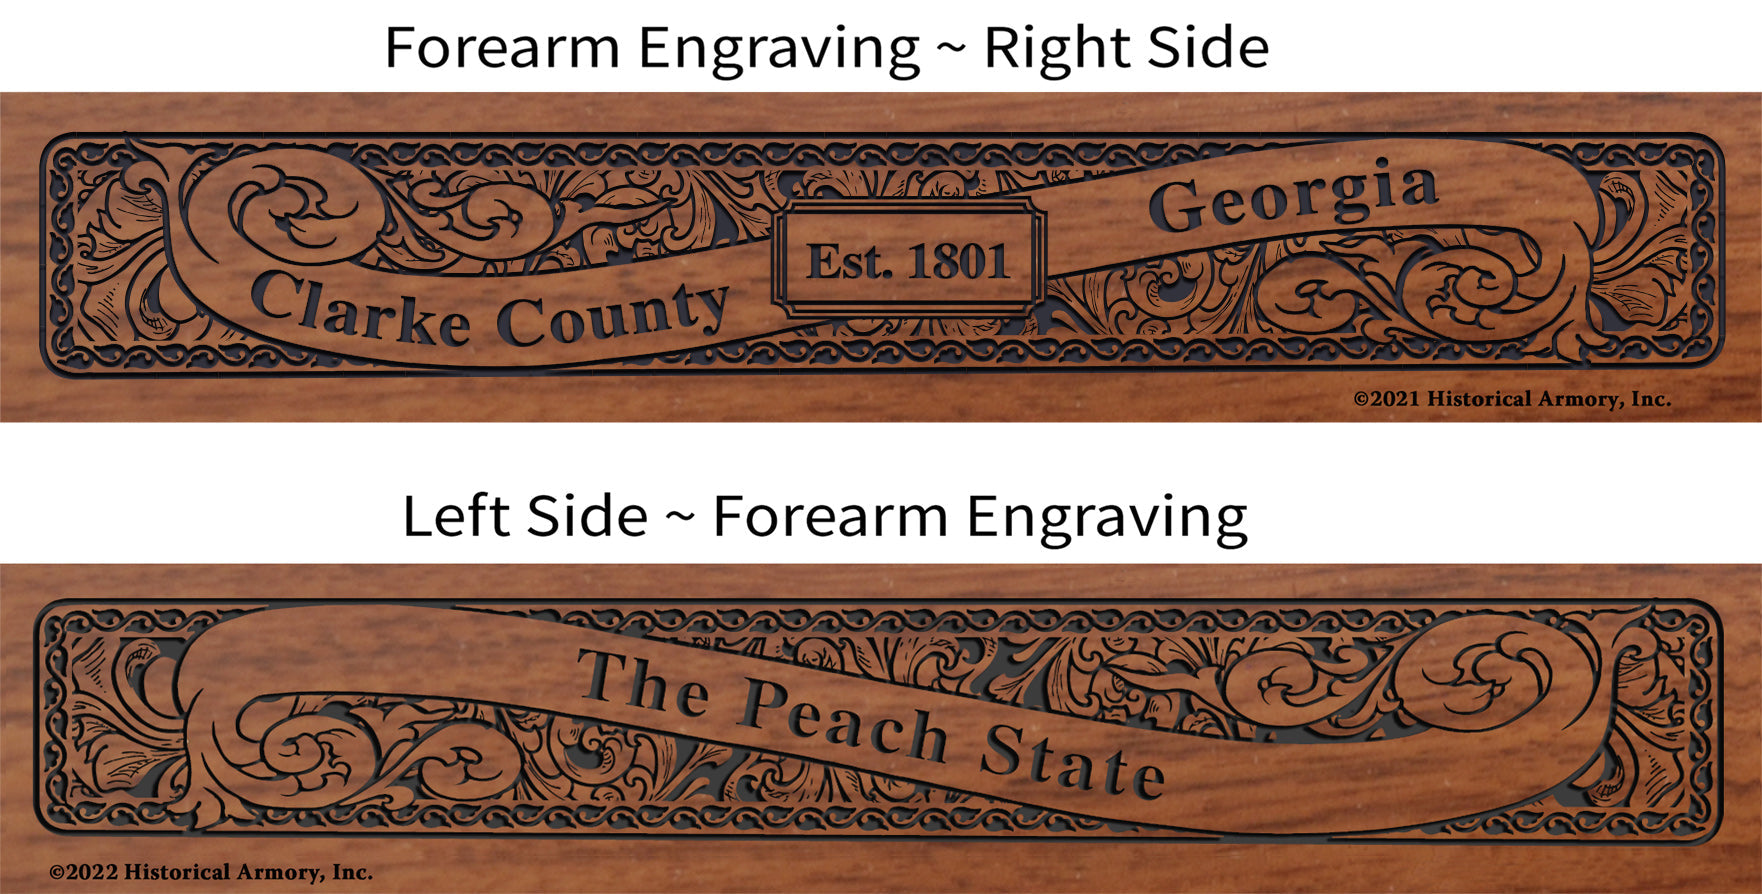 Clarke County Georgia Establishment and Motto History Engraved Rifle Forearm